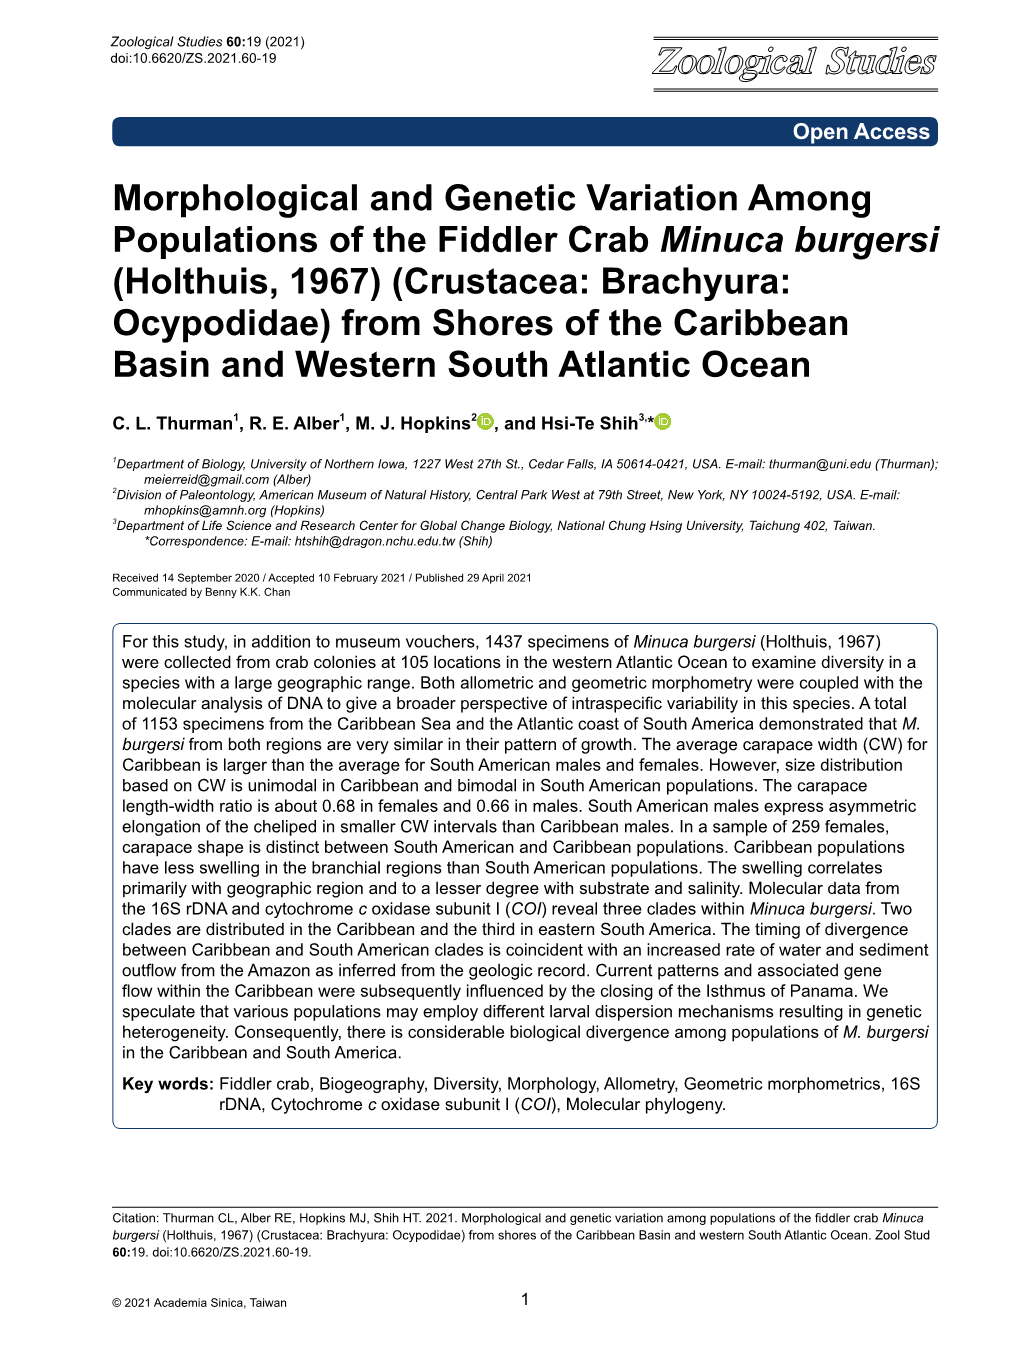 Morphological and Genetic Variation Among